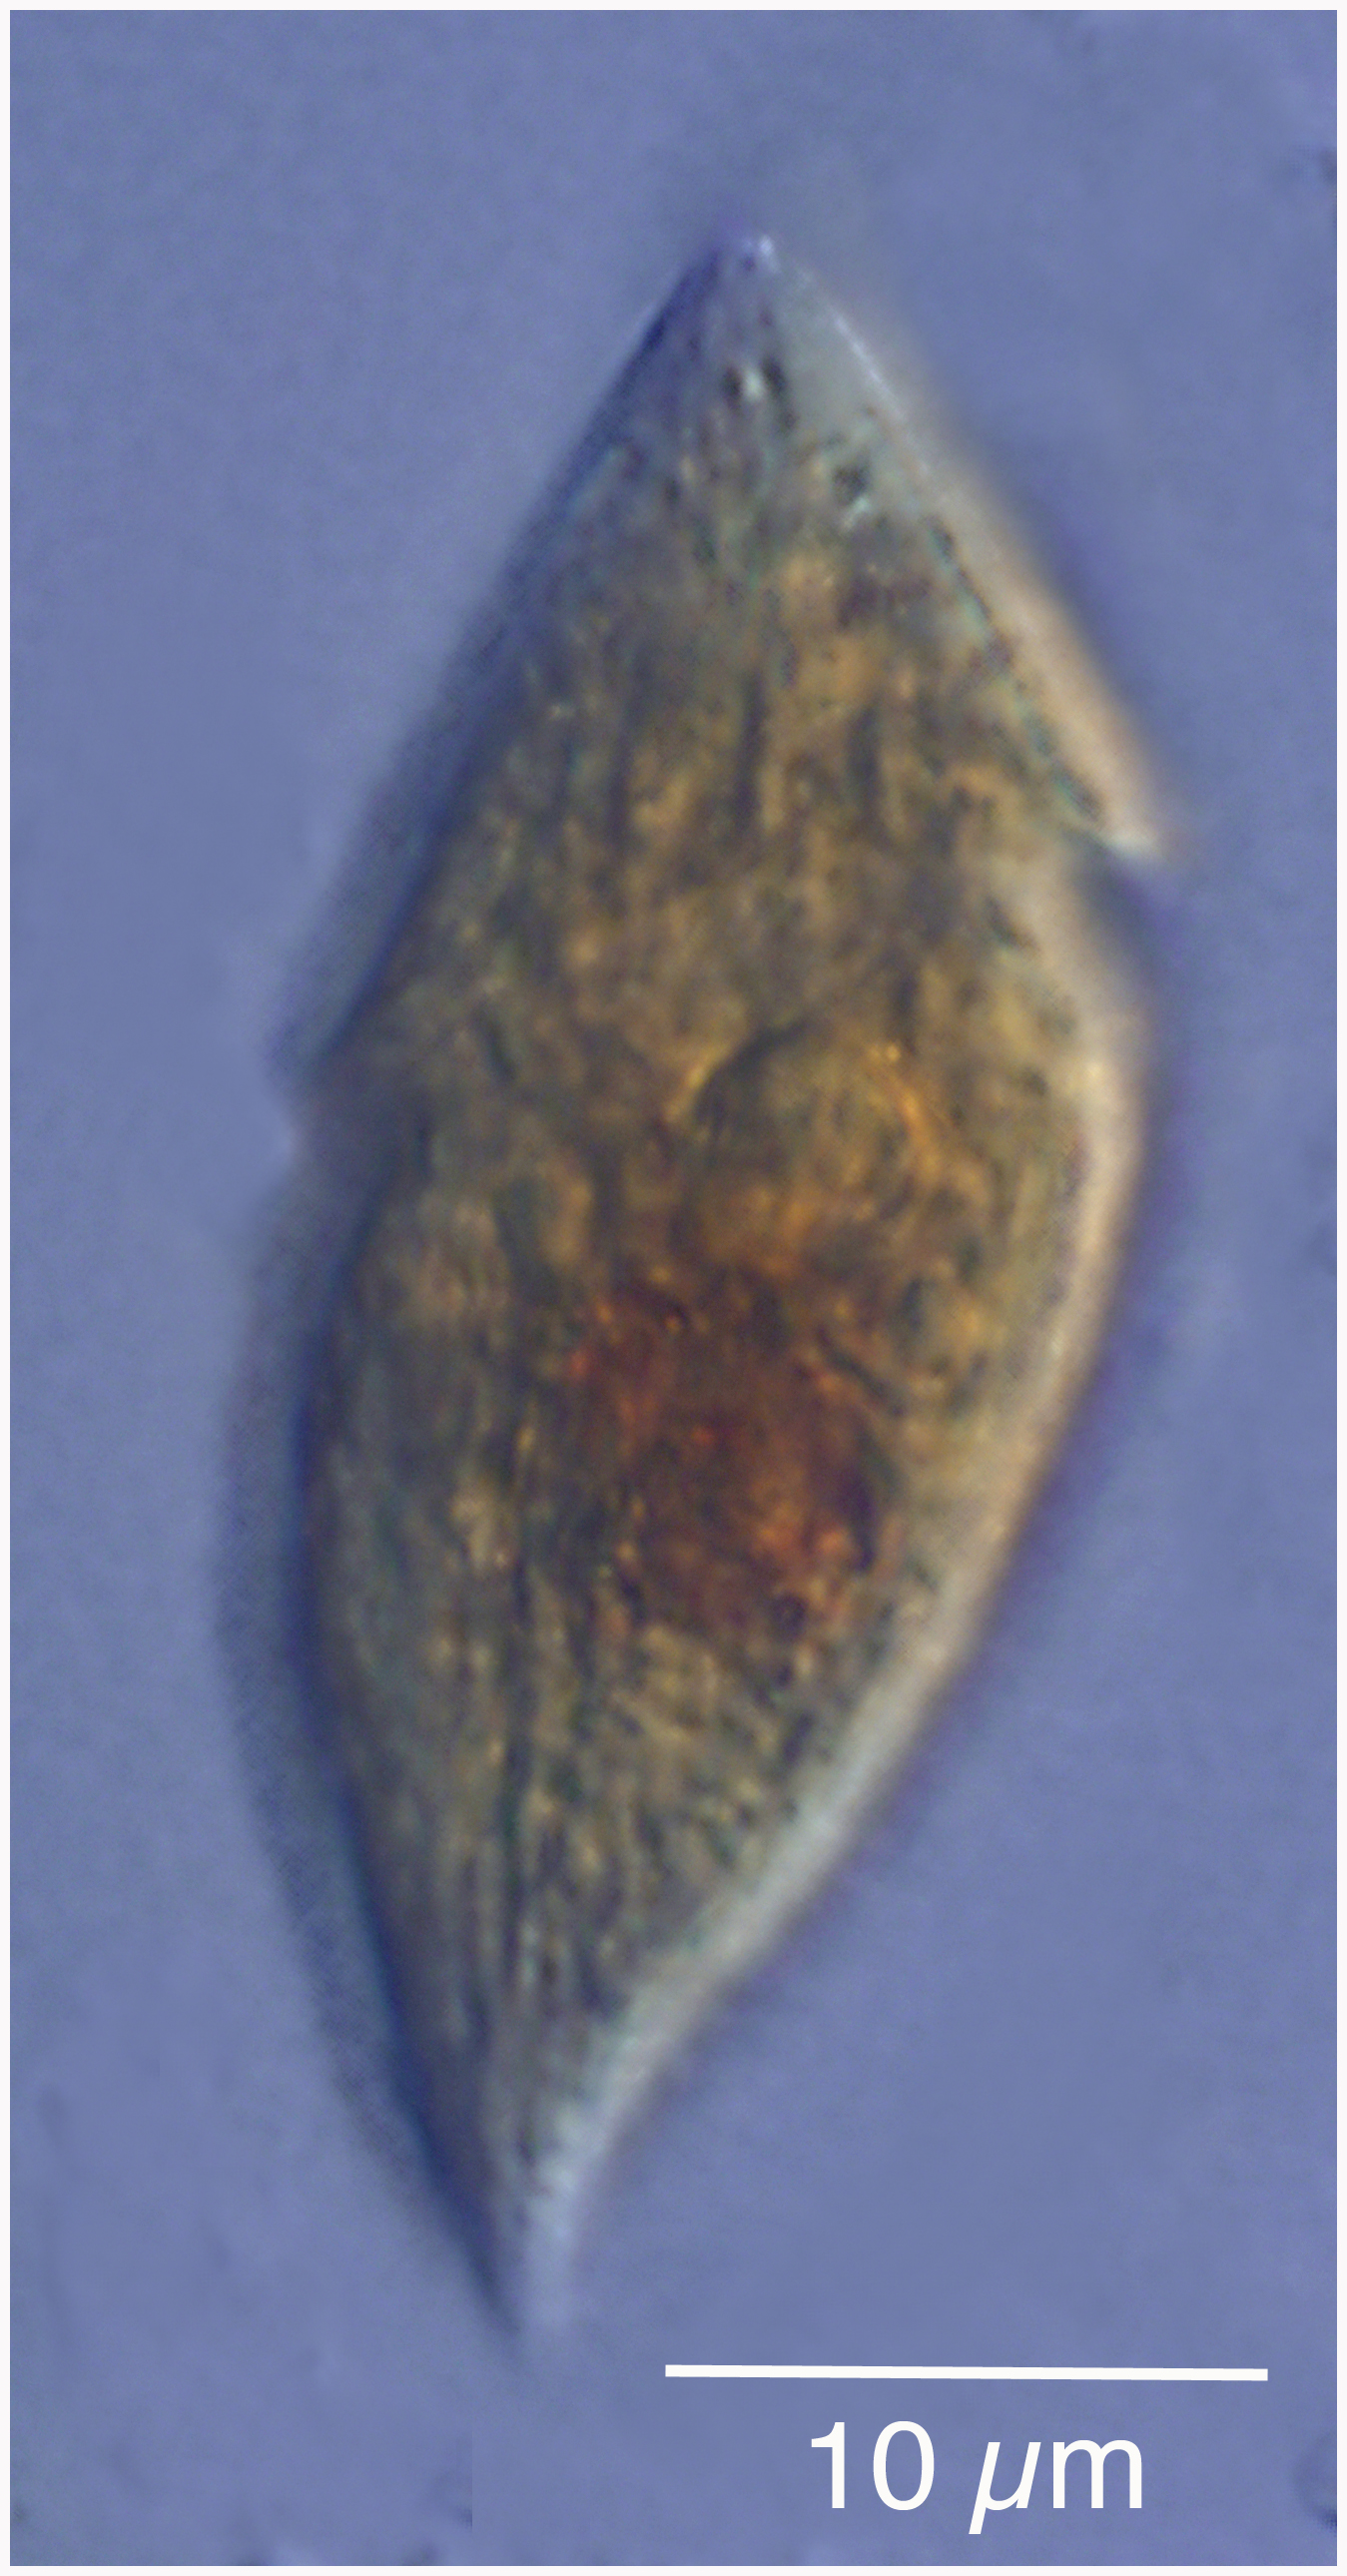 small Gyrodinium from the Etang de Thau